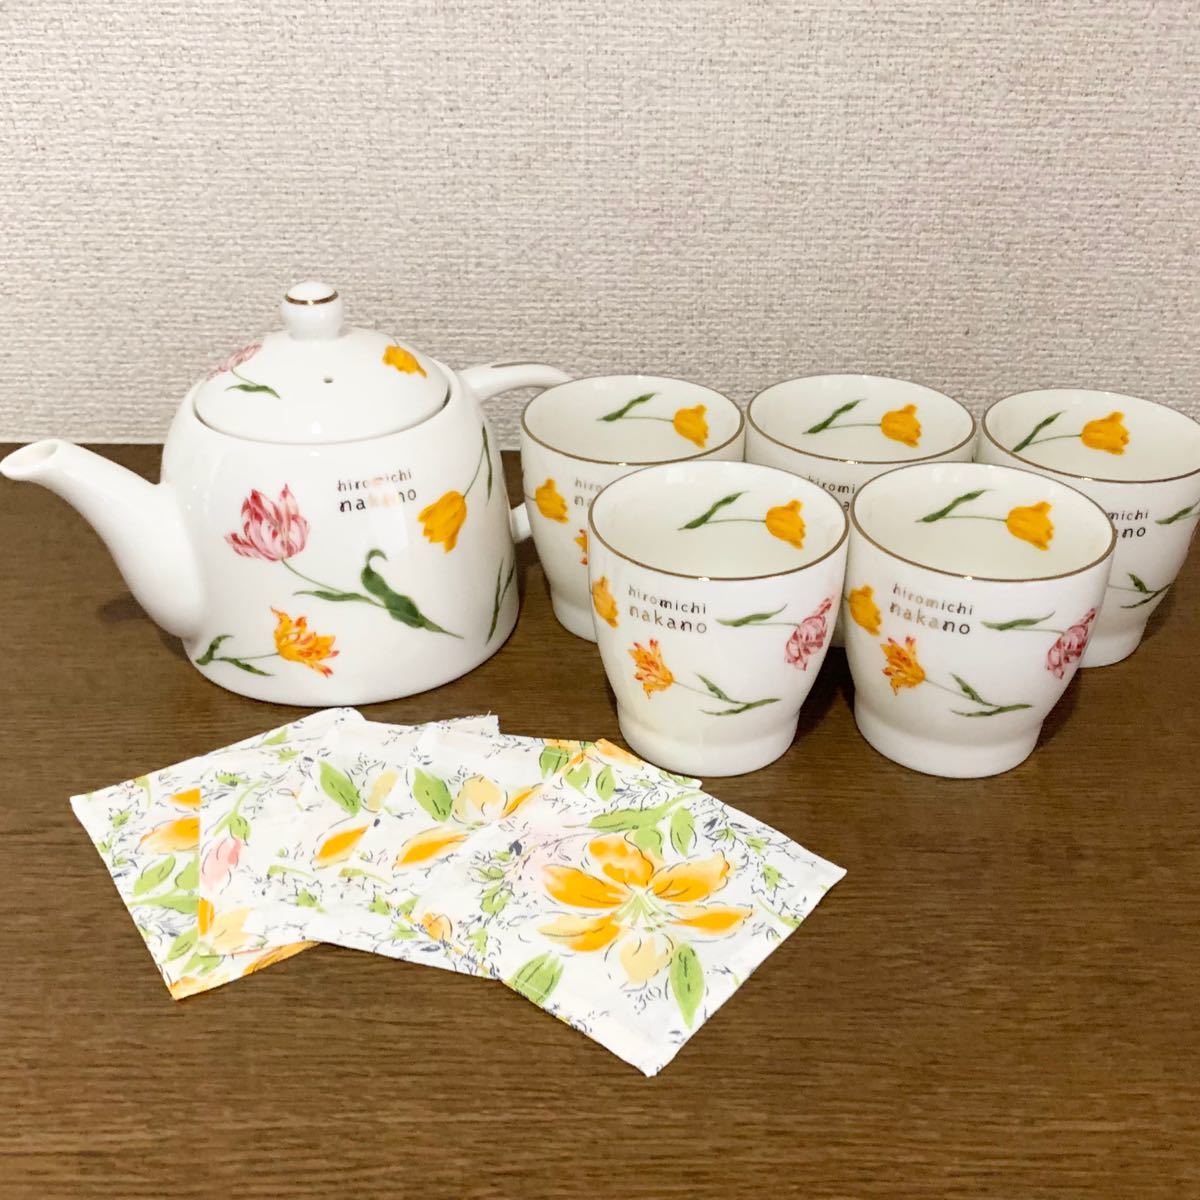 hiromichi nakano   茶器セット　ティーポットセット　　ティーカップ　コースター付き　食器　キッチン用品　陶器